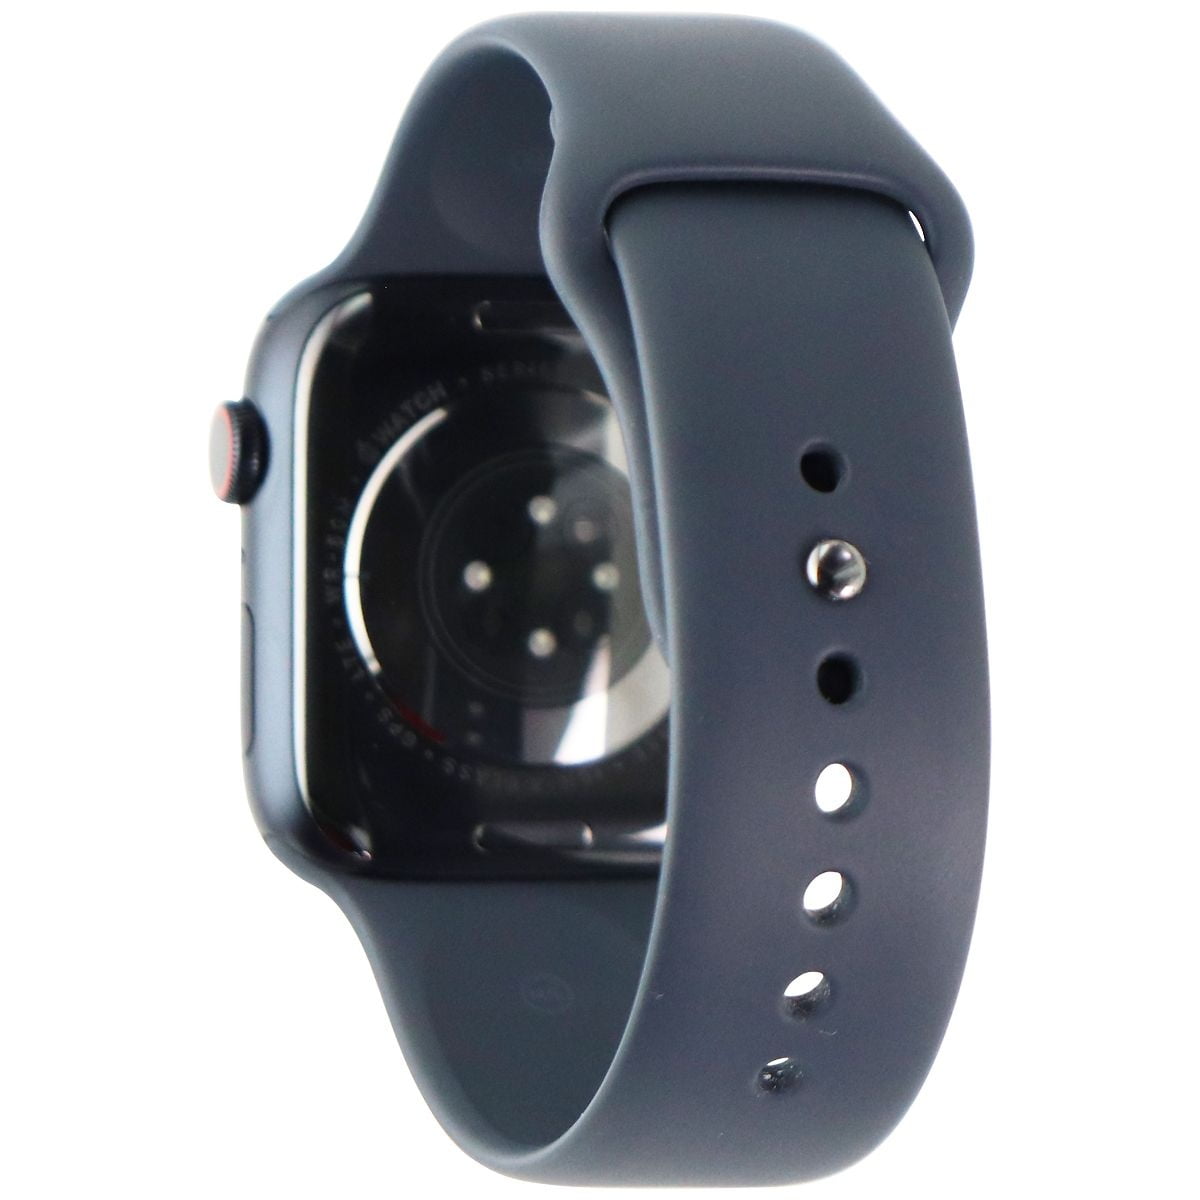 Restored Apple Watch Series 7 (GPS + LTE) A2477 (45mm 